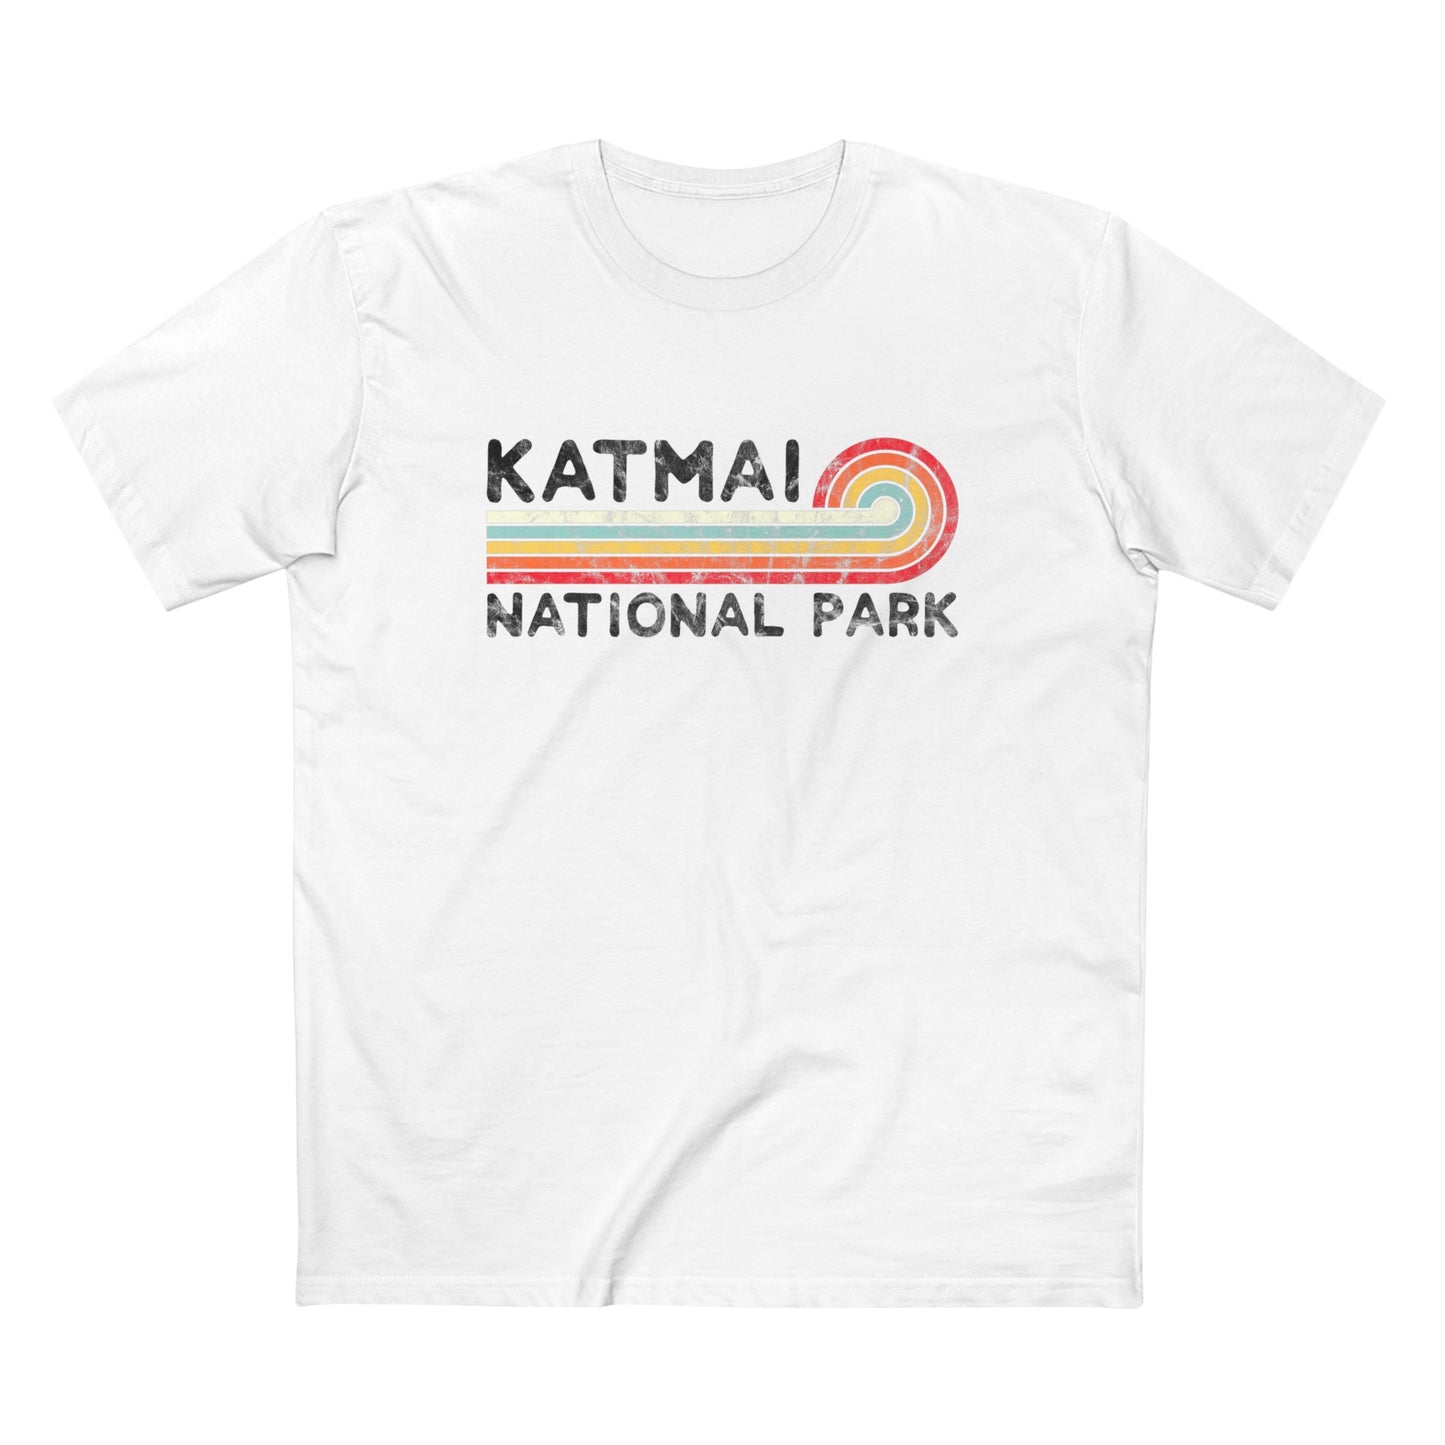 Katmai National Park T-Shirt - Vintage Stretched Sunrise